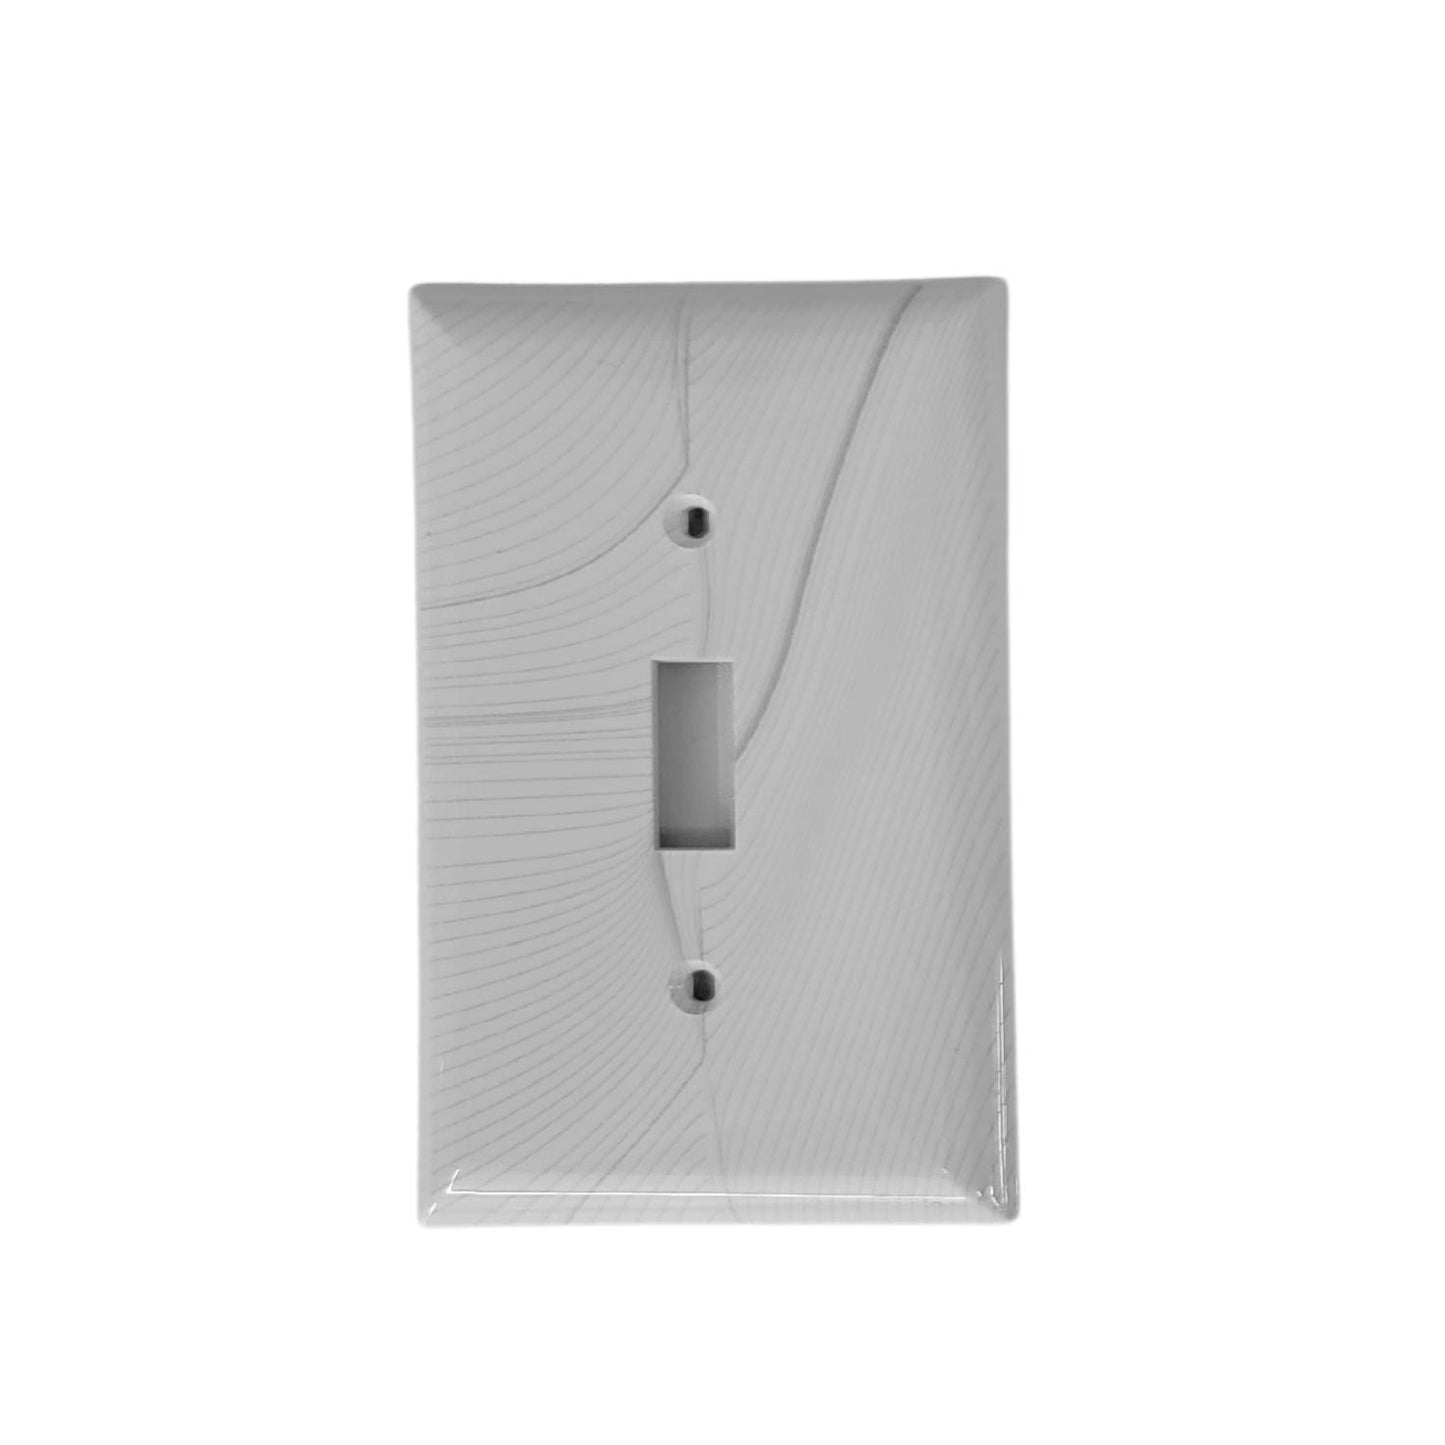 Geometric Design Single Toggle Light Switch Cover Wall Plate White LA143-PWP14